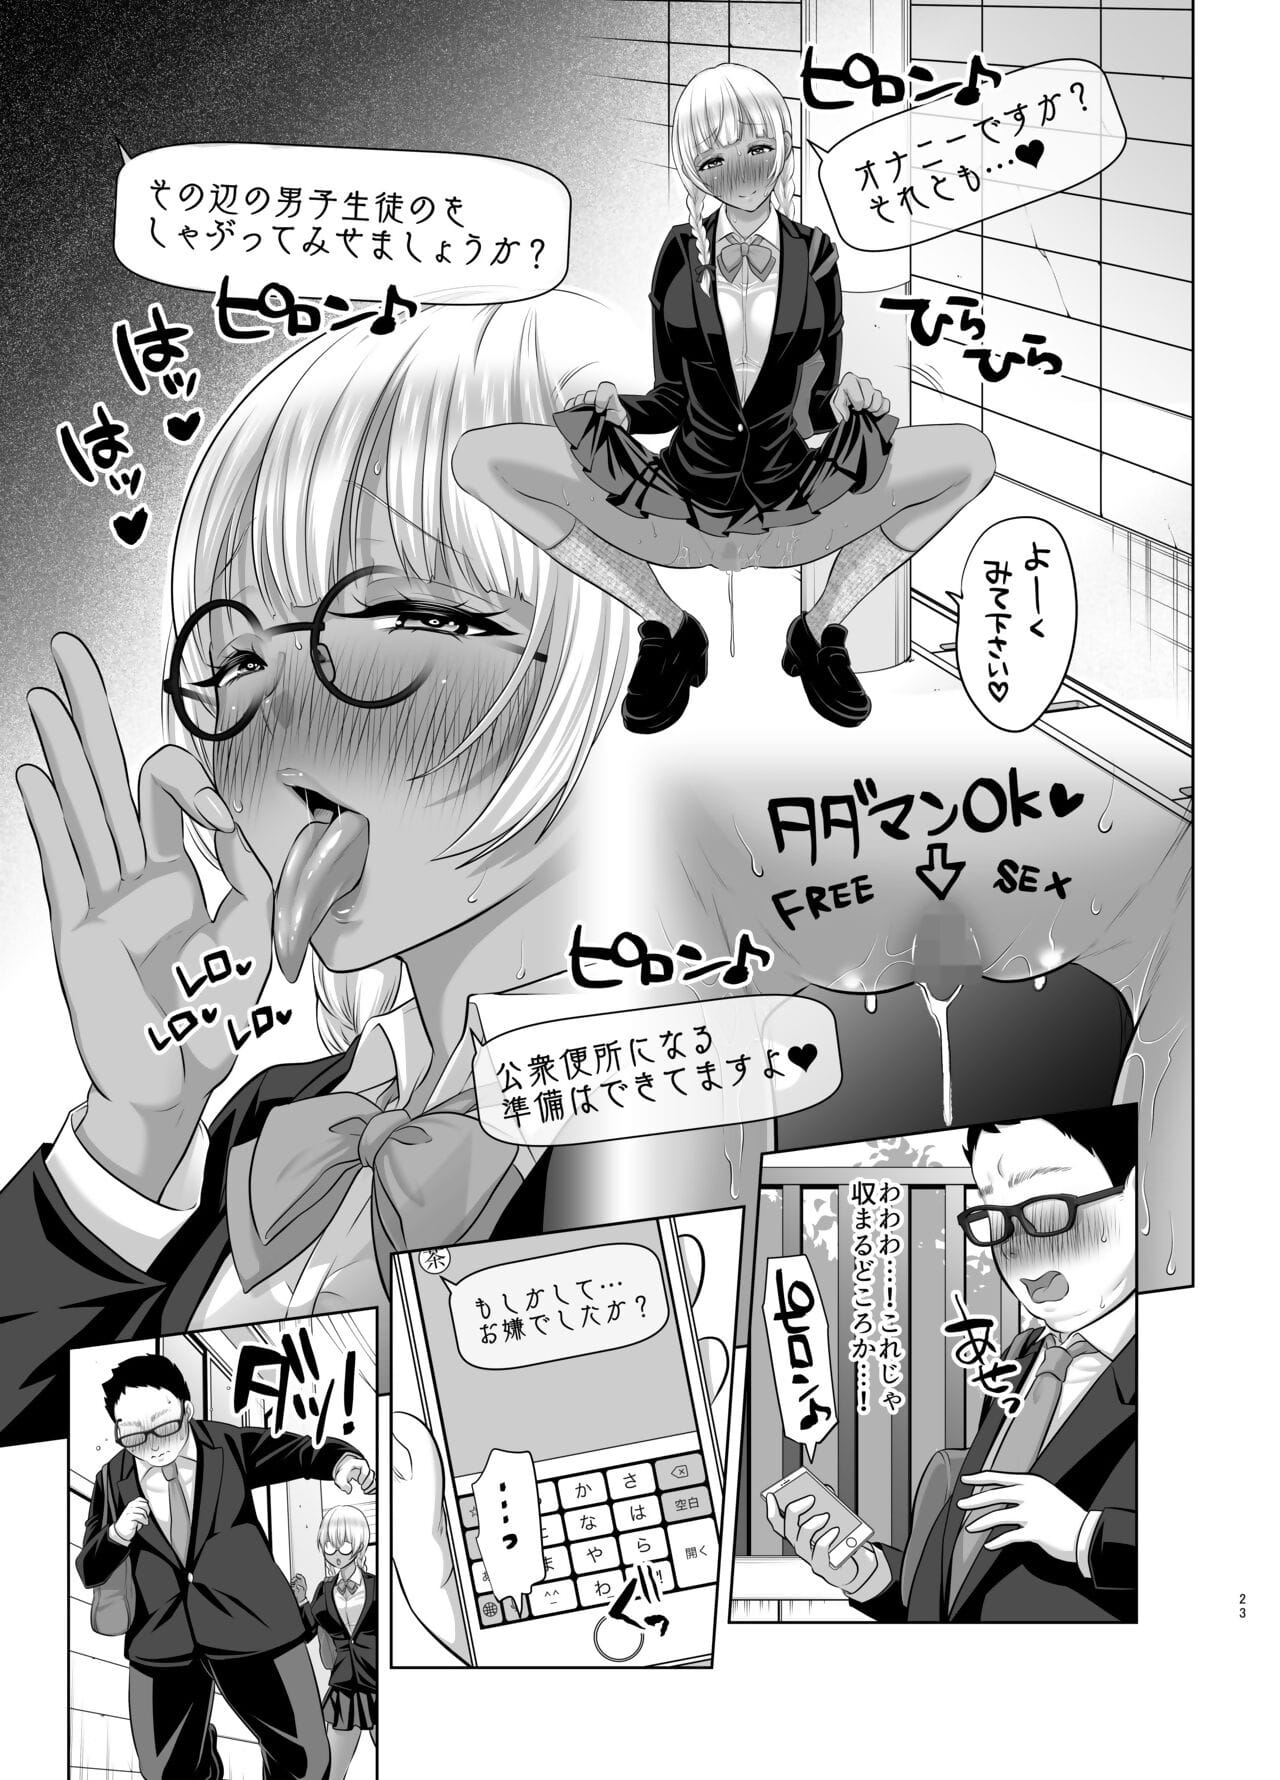 кобихецуравасетекудасай butaosama. page 1